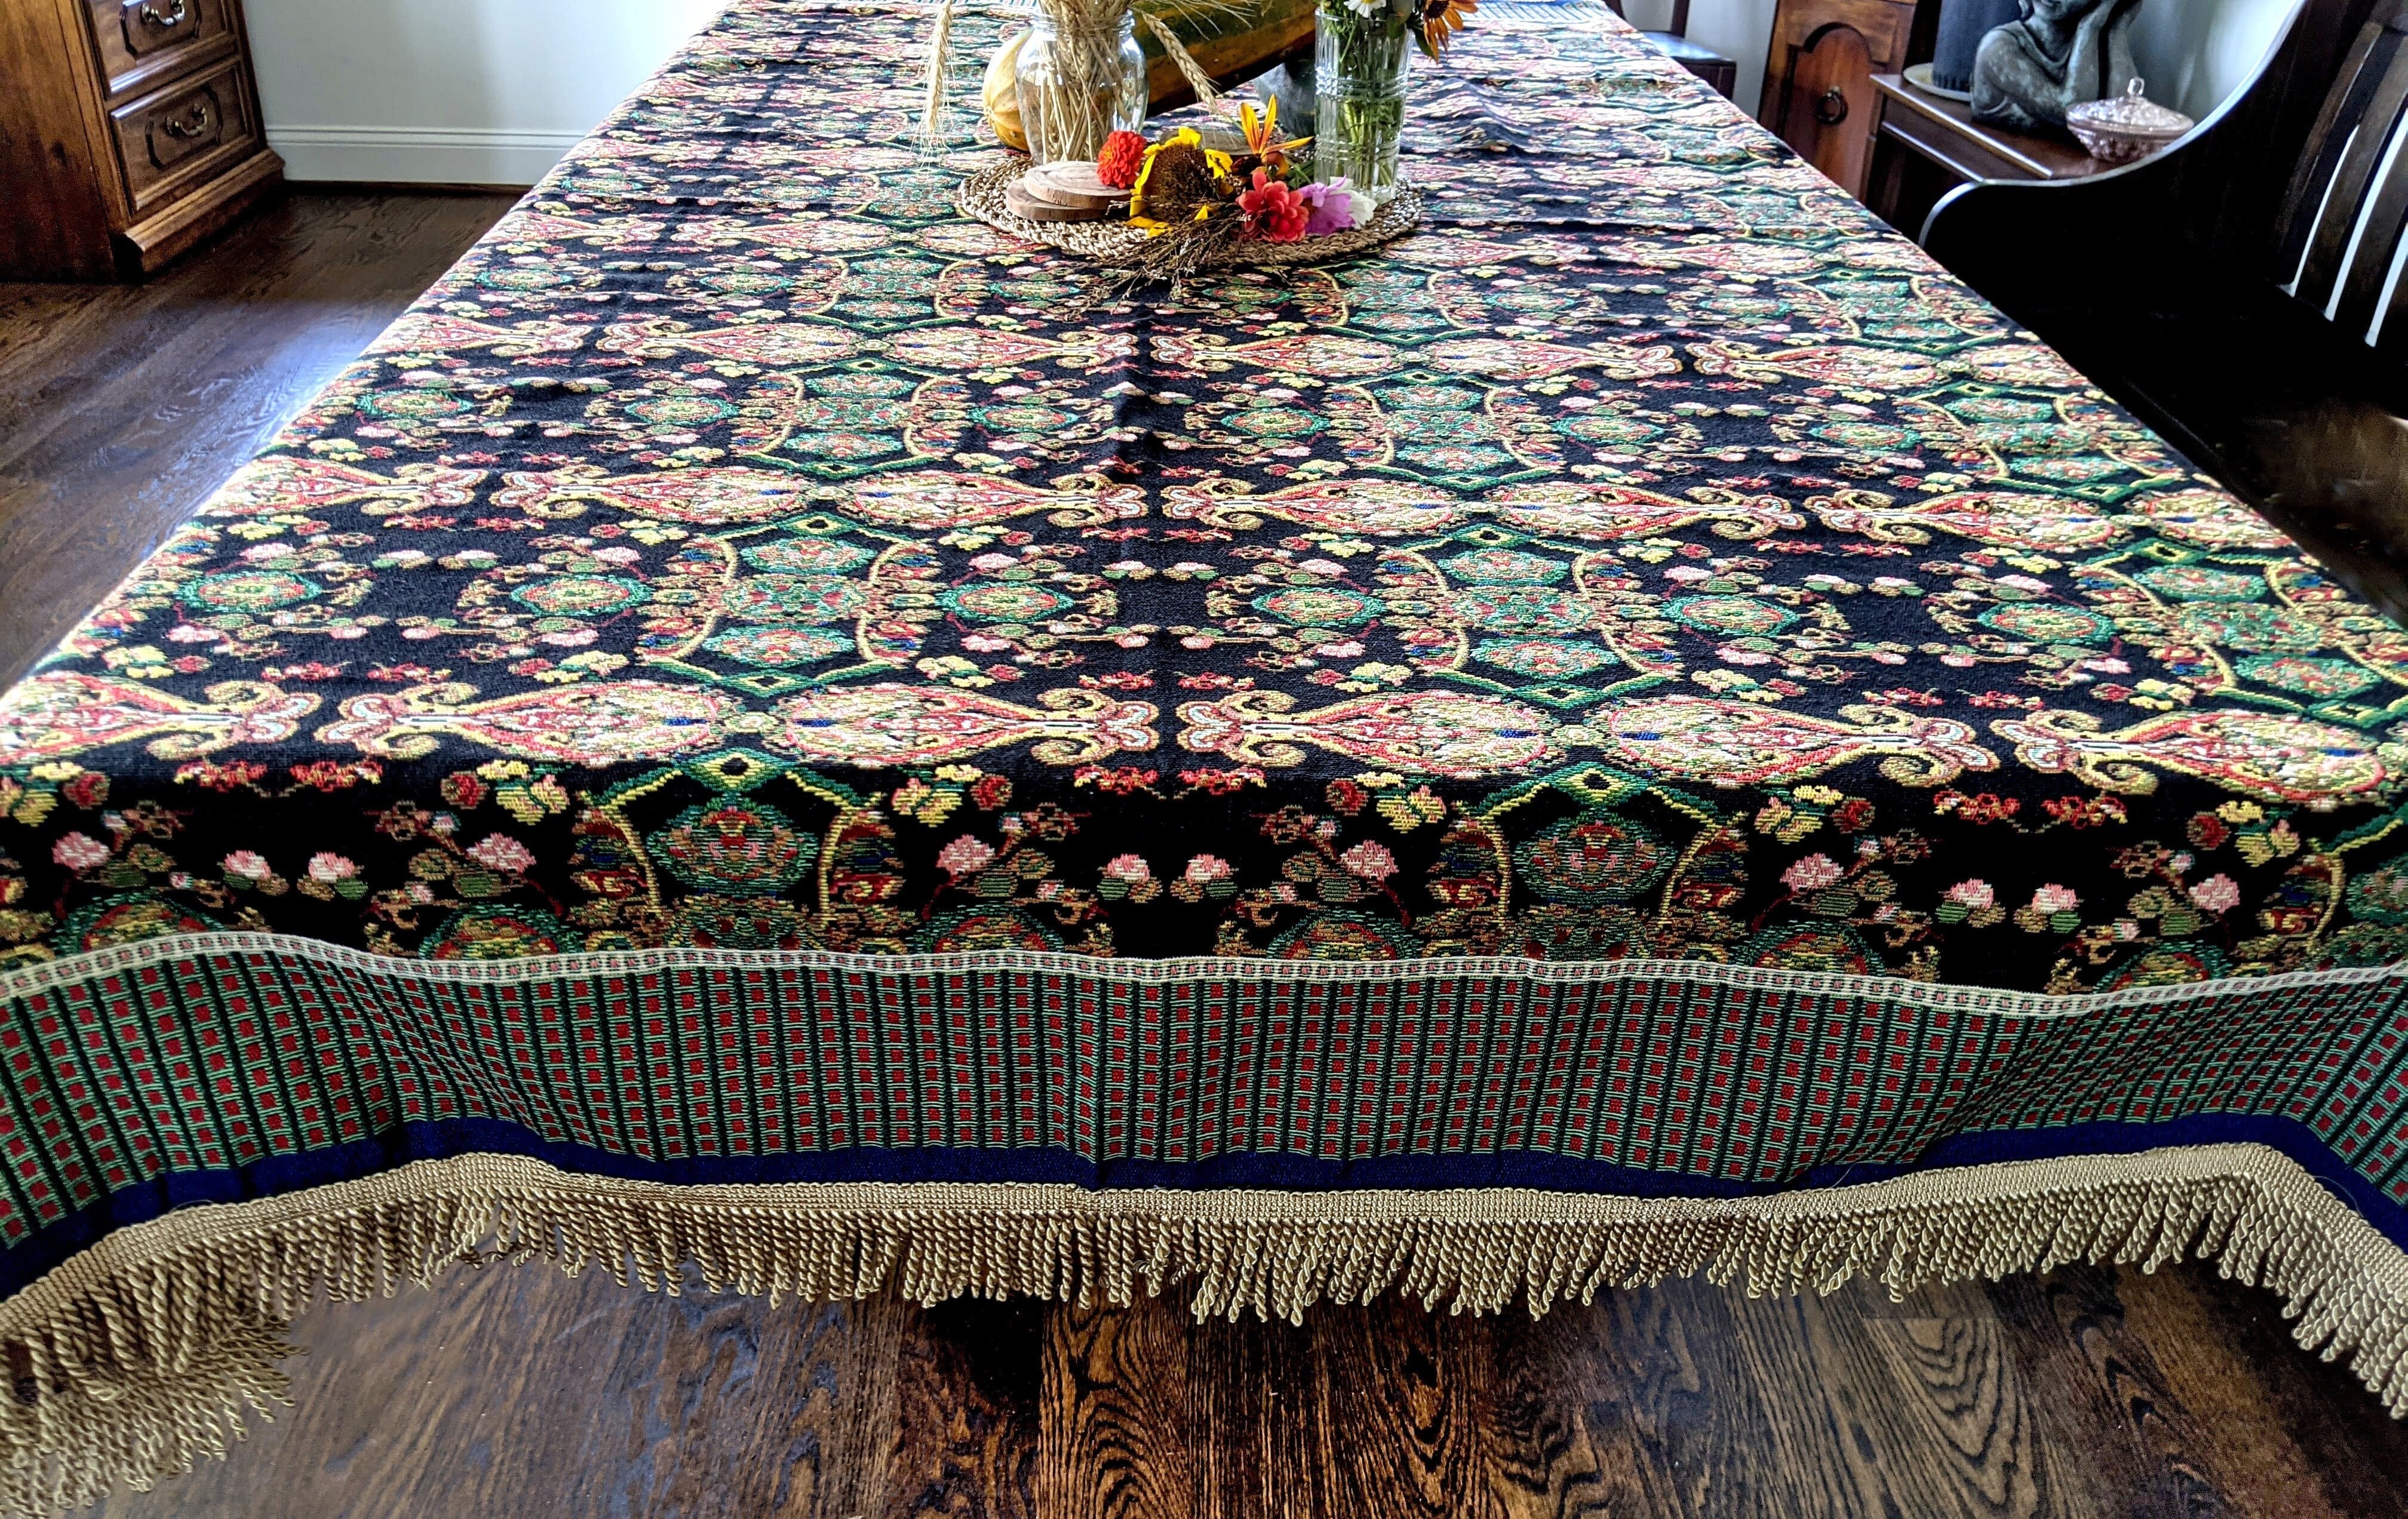 Tache Elegant Black Ornate Paisley Woven Tapestry Tablecloth (18192) - Tache Home Fashion